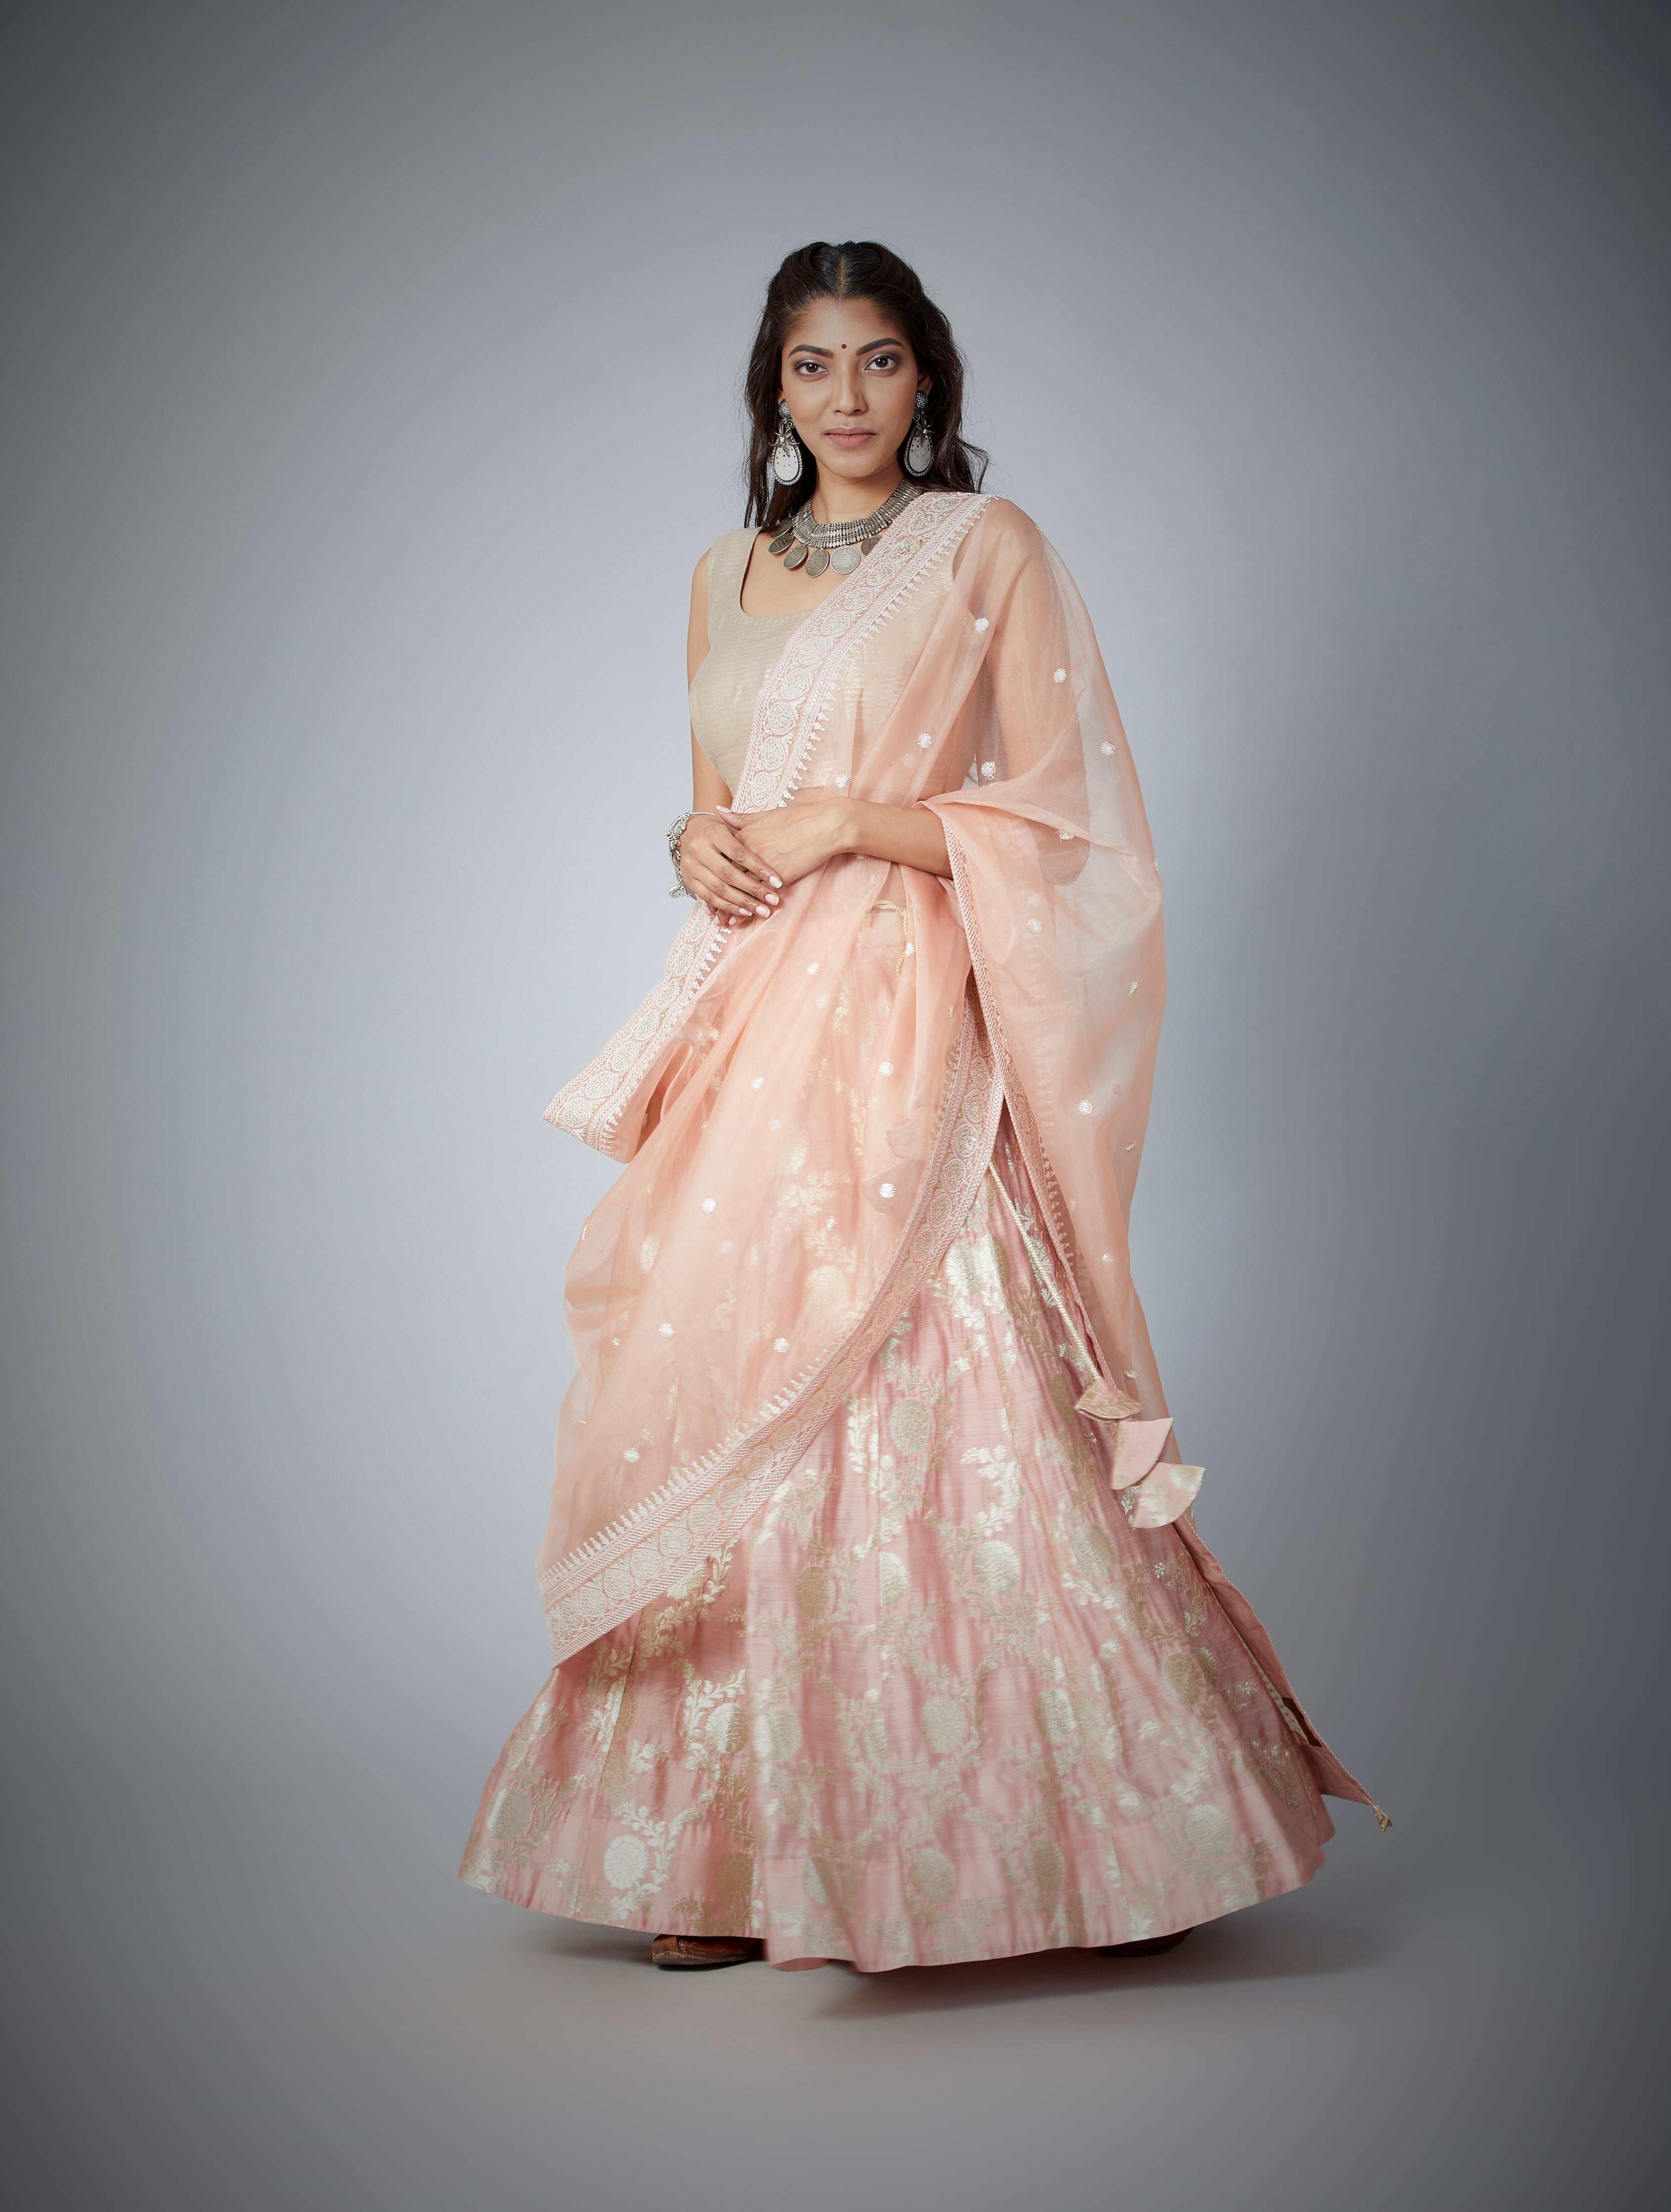 Festive Edit : Banarasi Brocade Lehenga With Sleeveless Choli And Embroidered Dupatta.